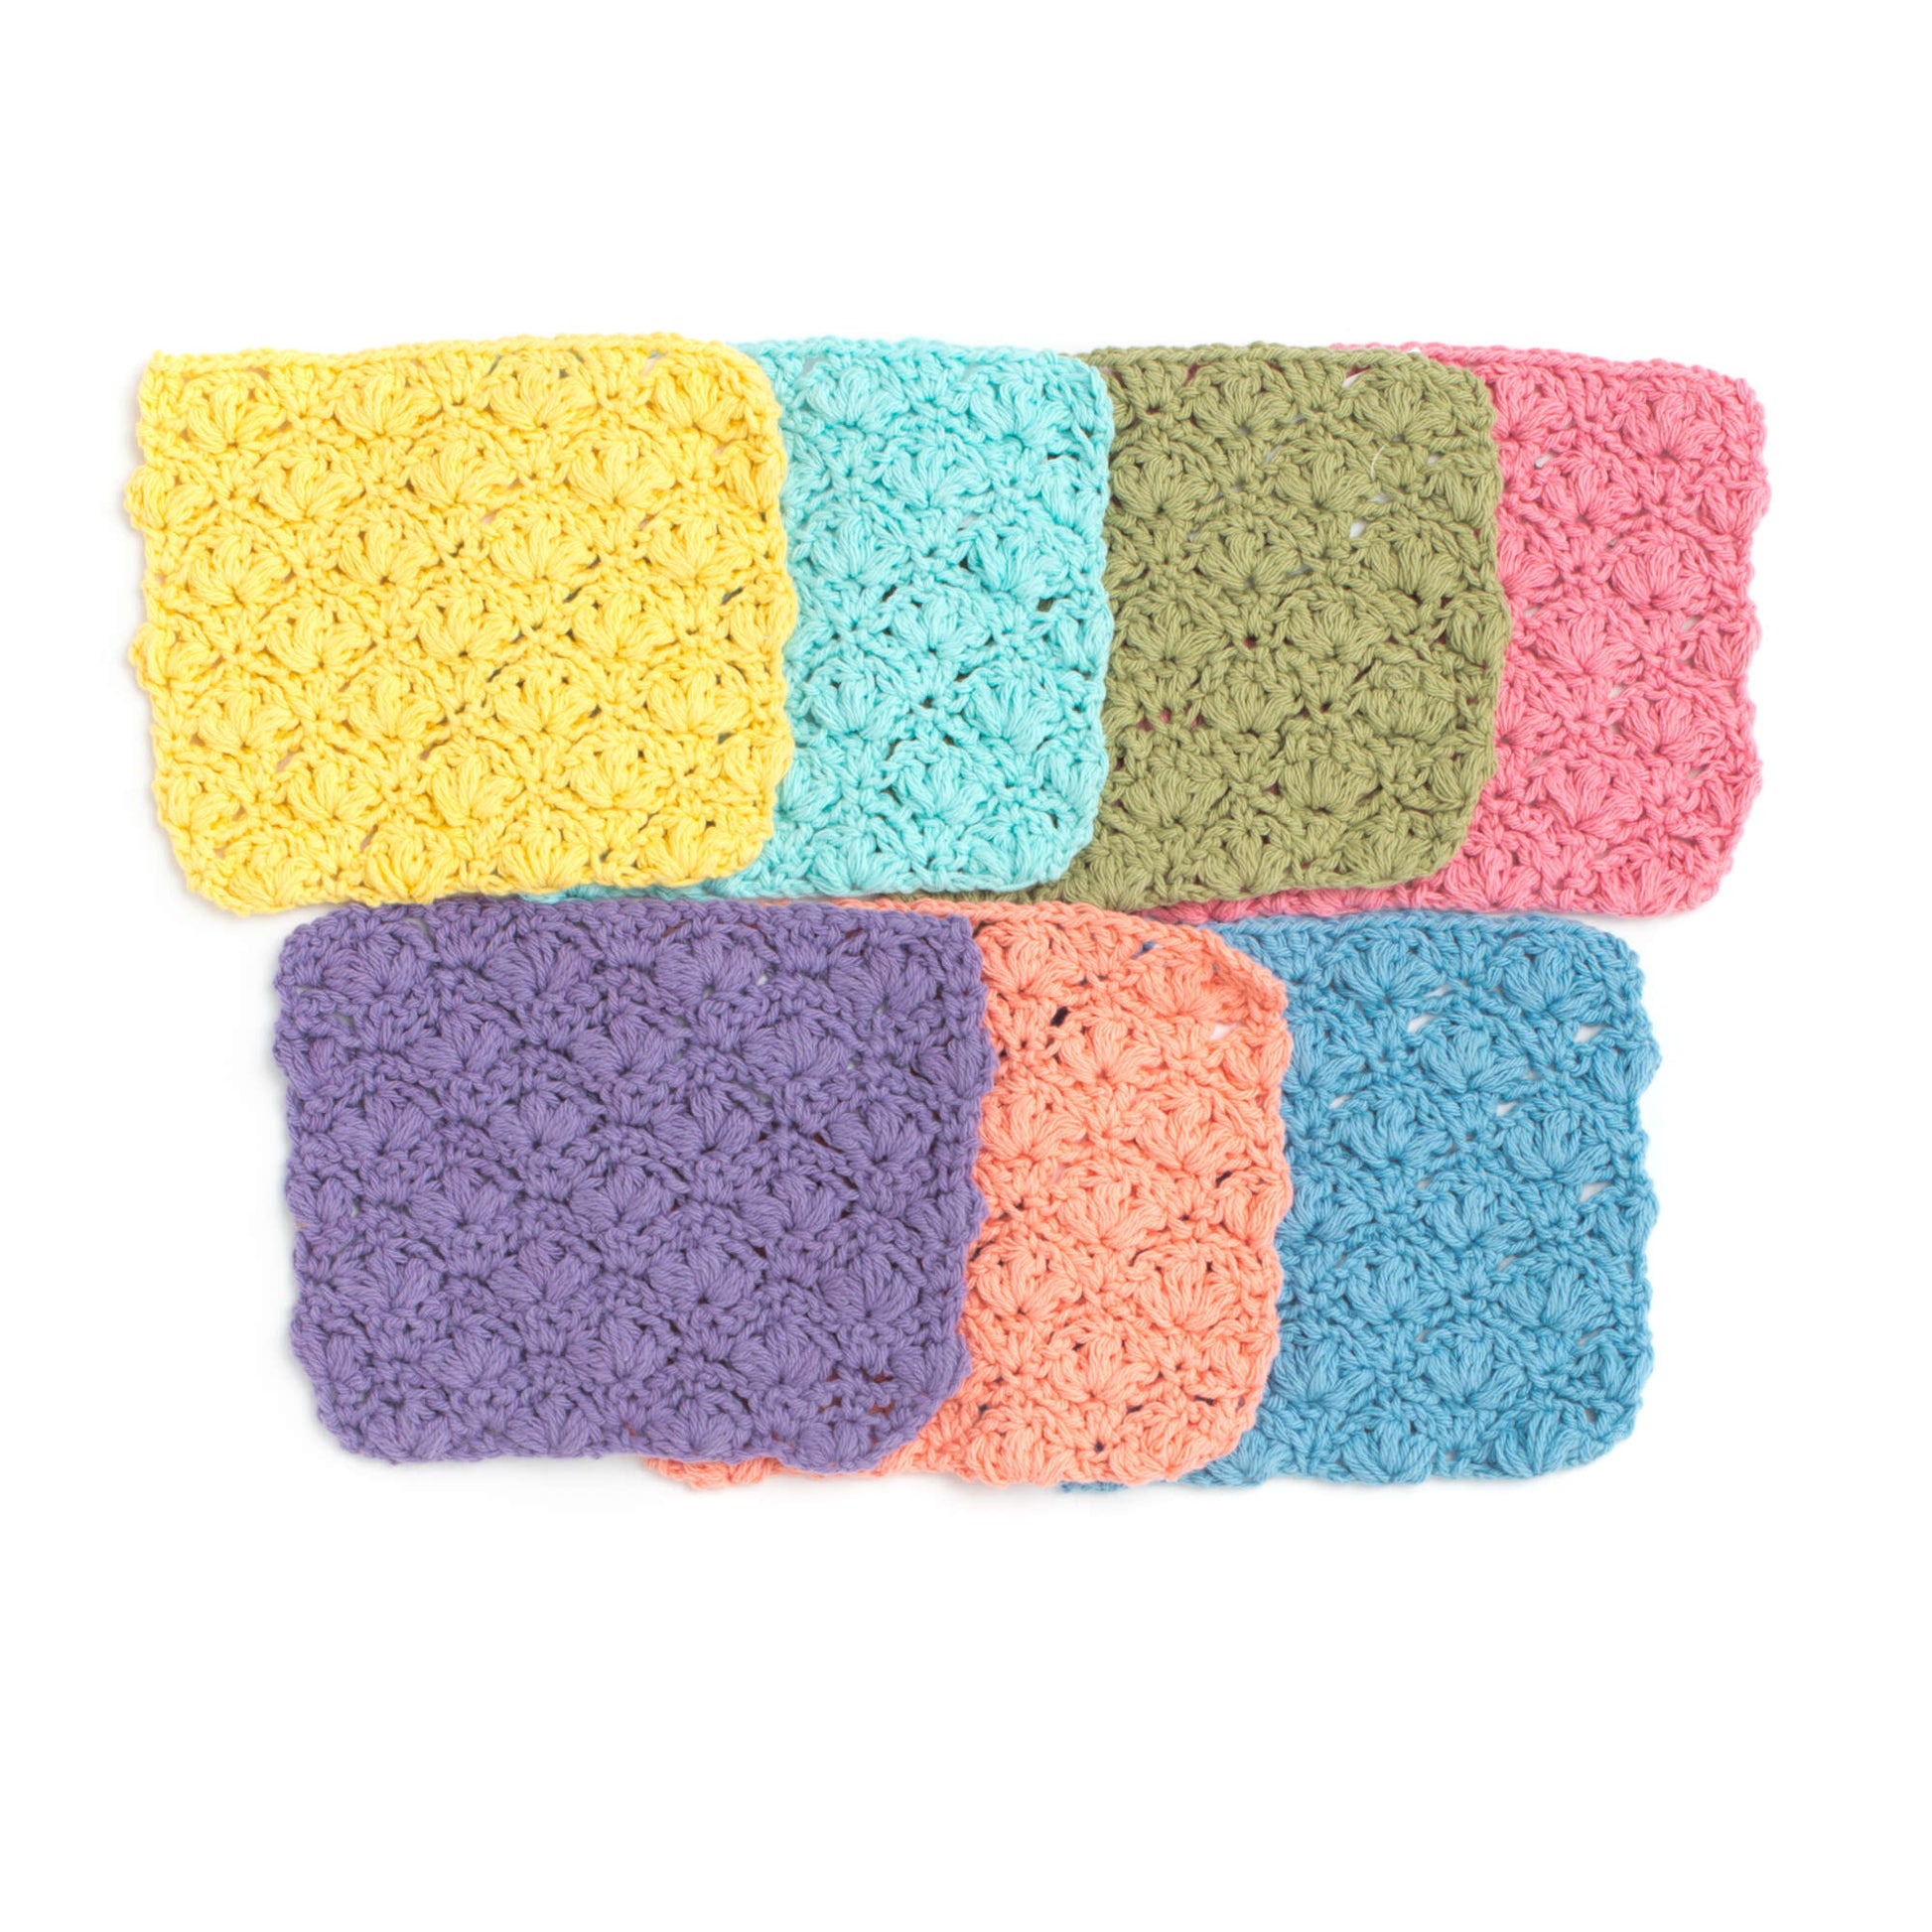 Free Lily Sugar'n Cream Flowers Dishcloth Crochet Pattern